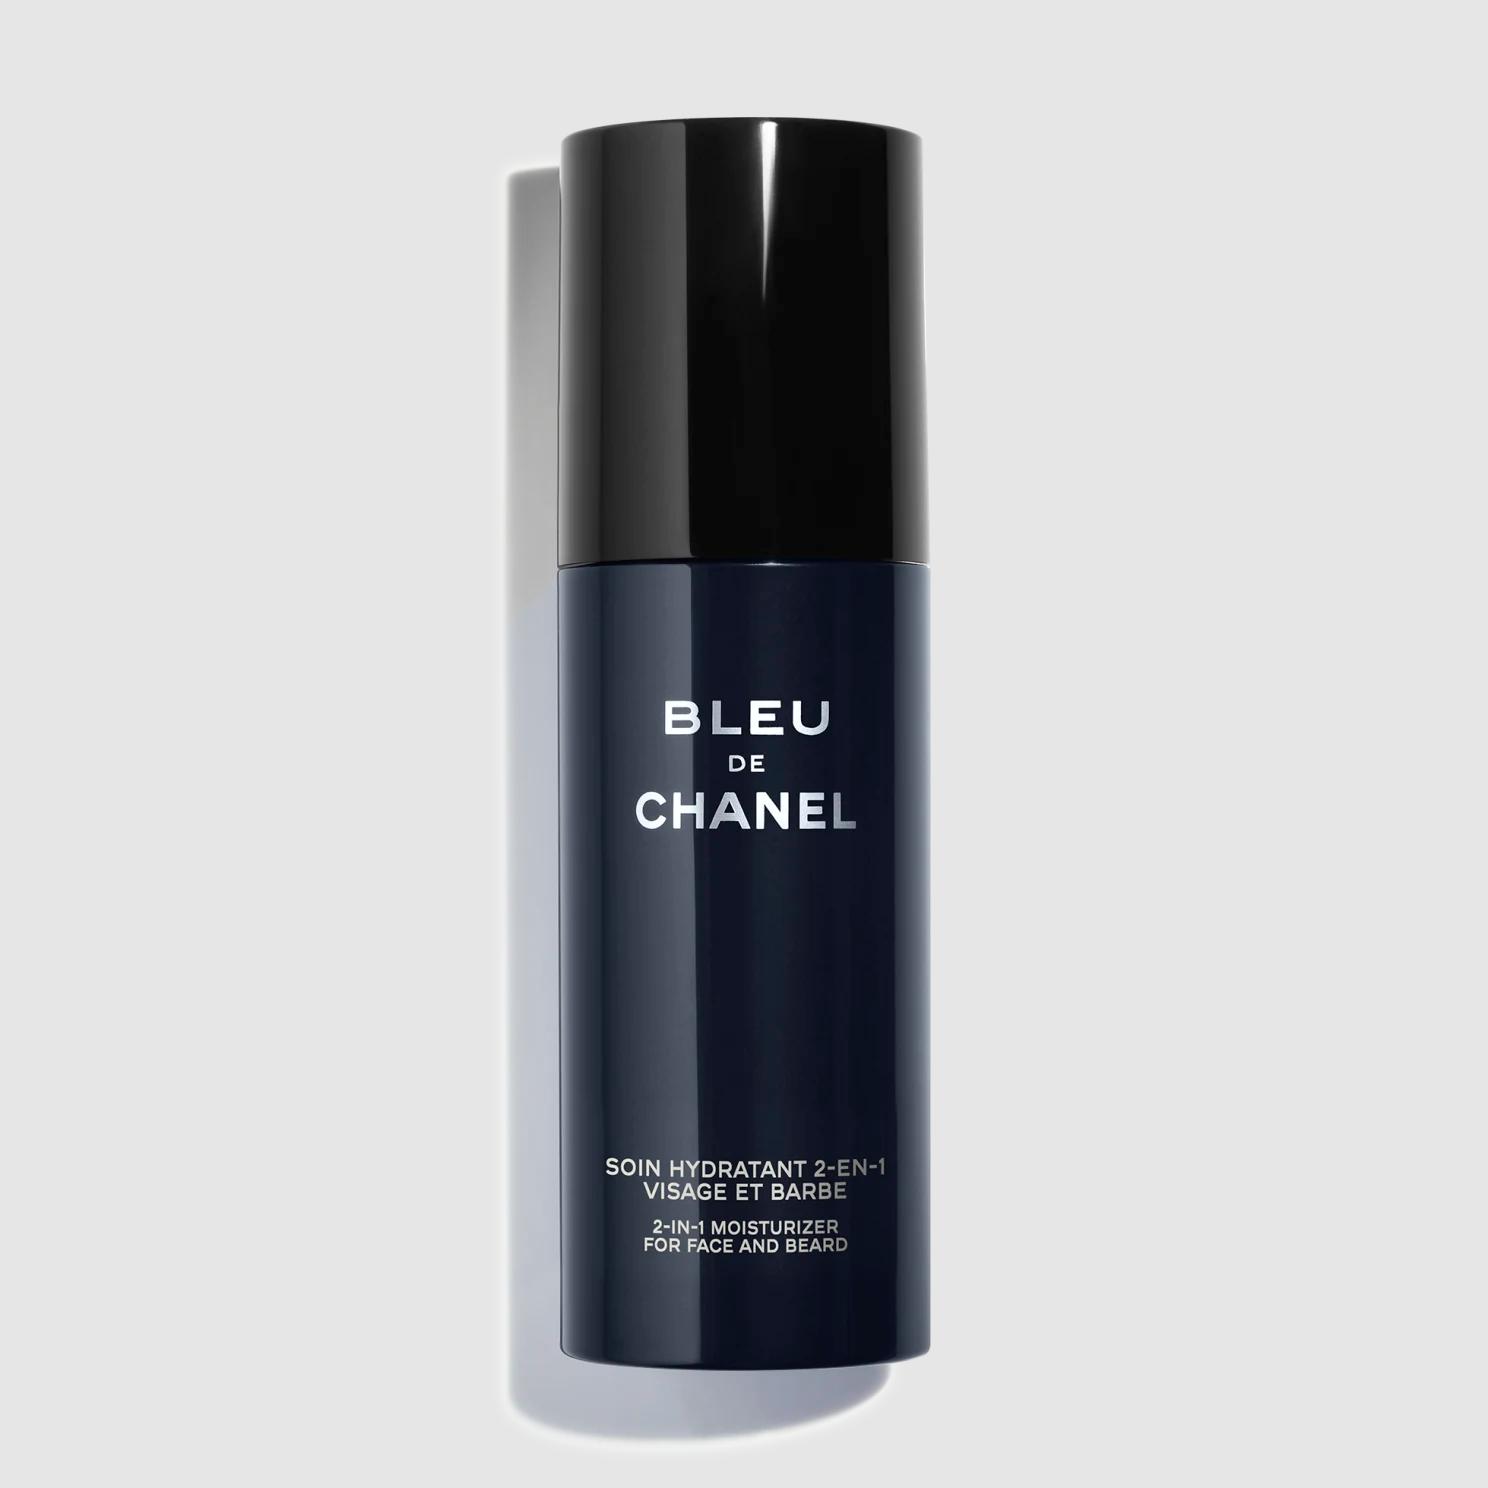 Nước Hoa Chanel Bleu De Chanel 2in1 Moisturizer For Face And Beard Nam 50ml